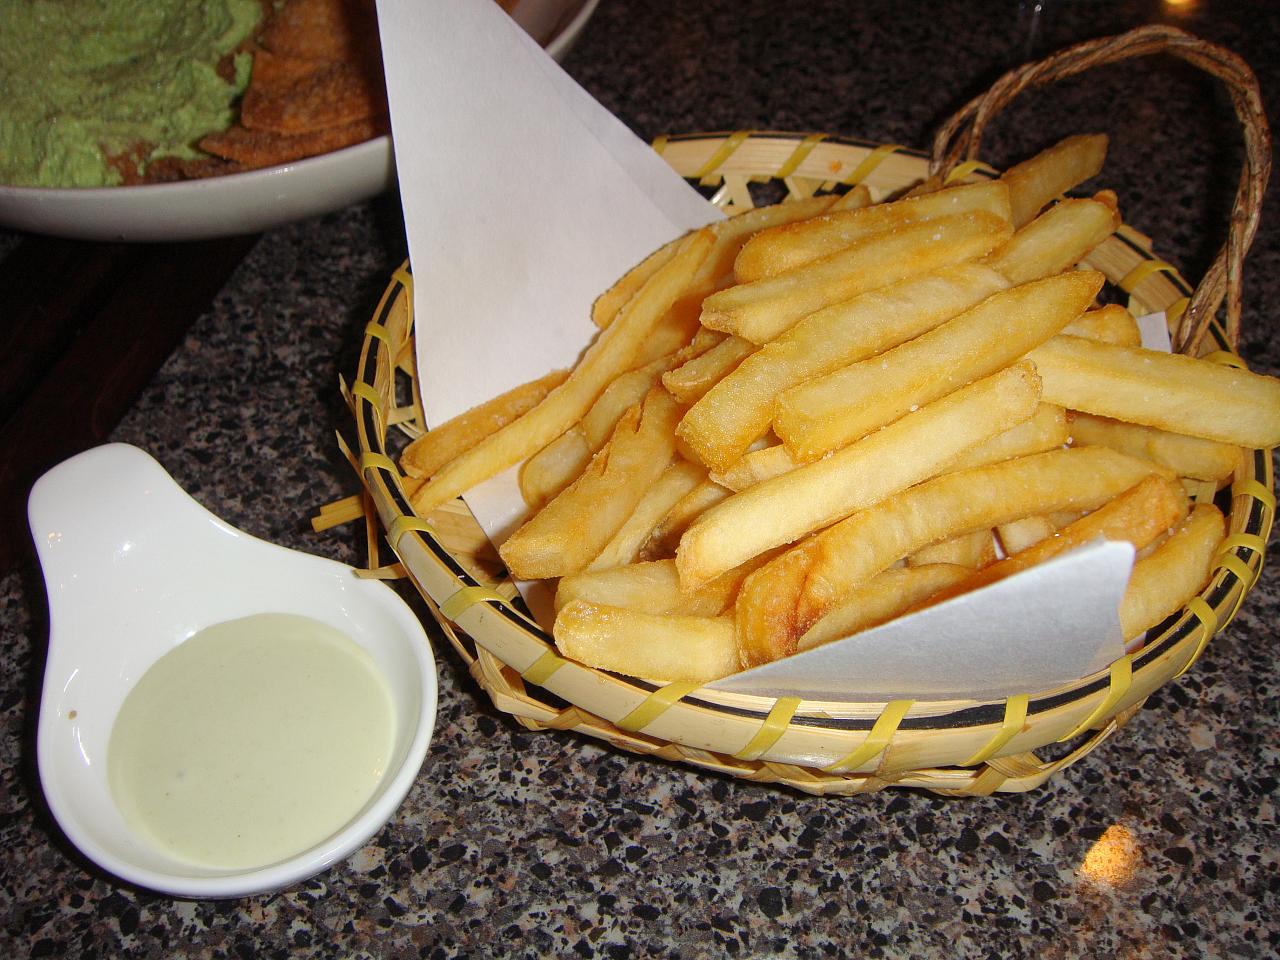 Fries with wasabi aioli